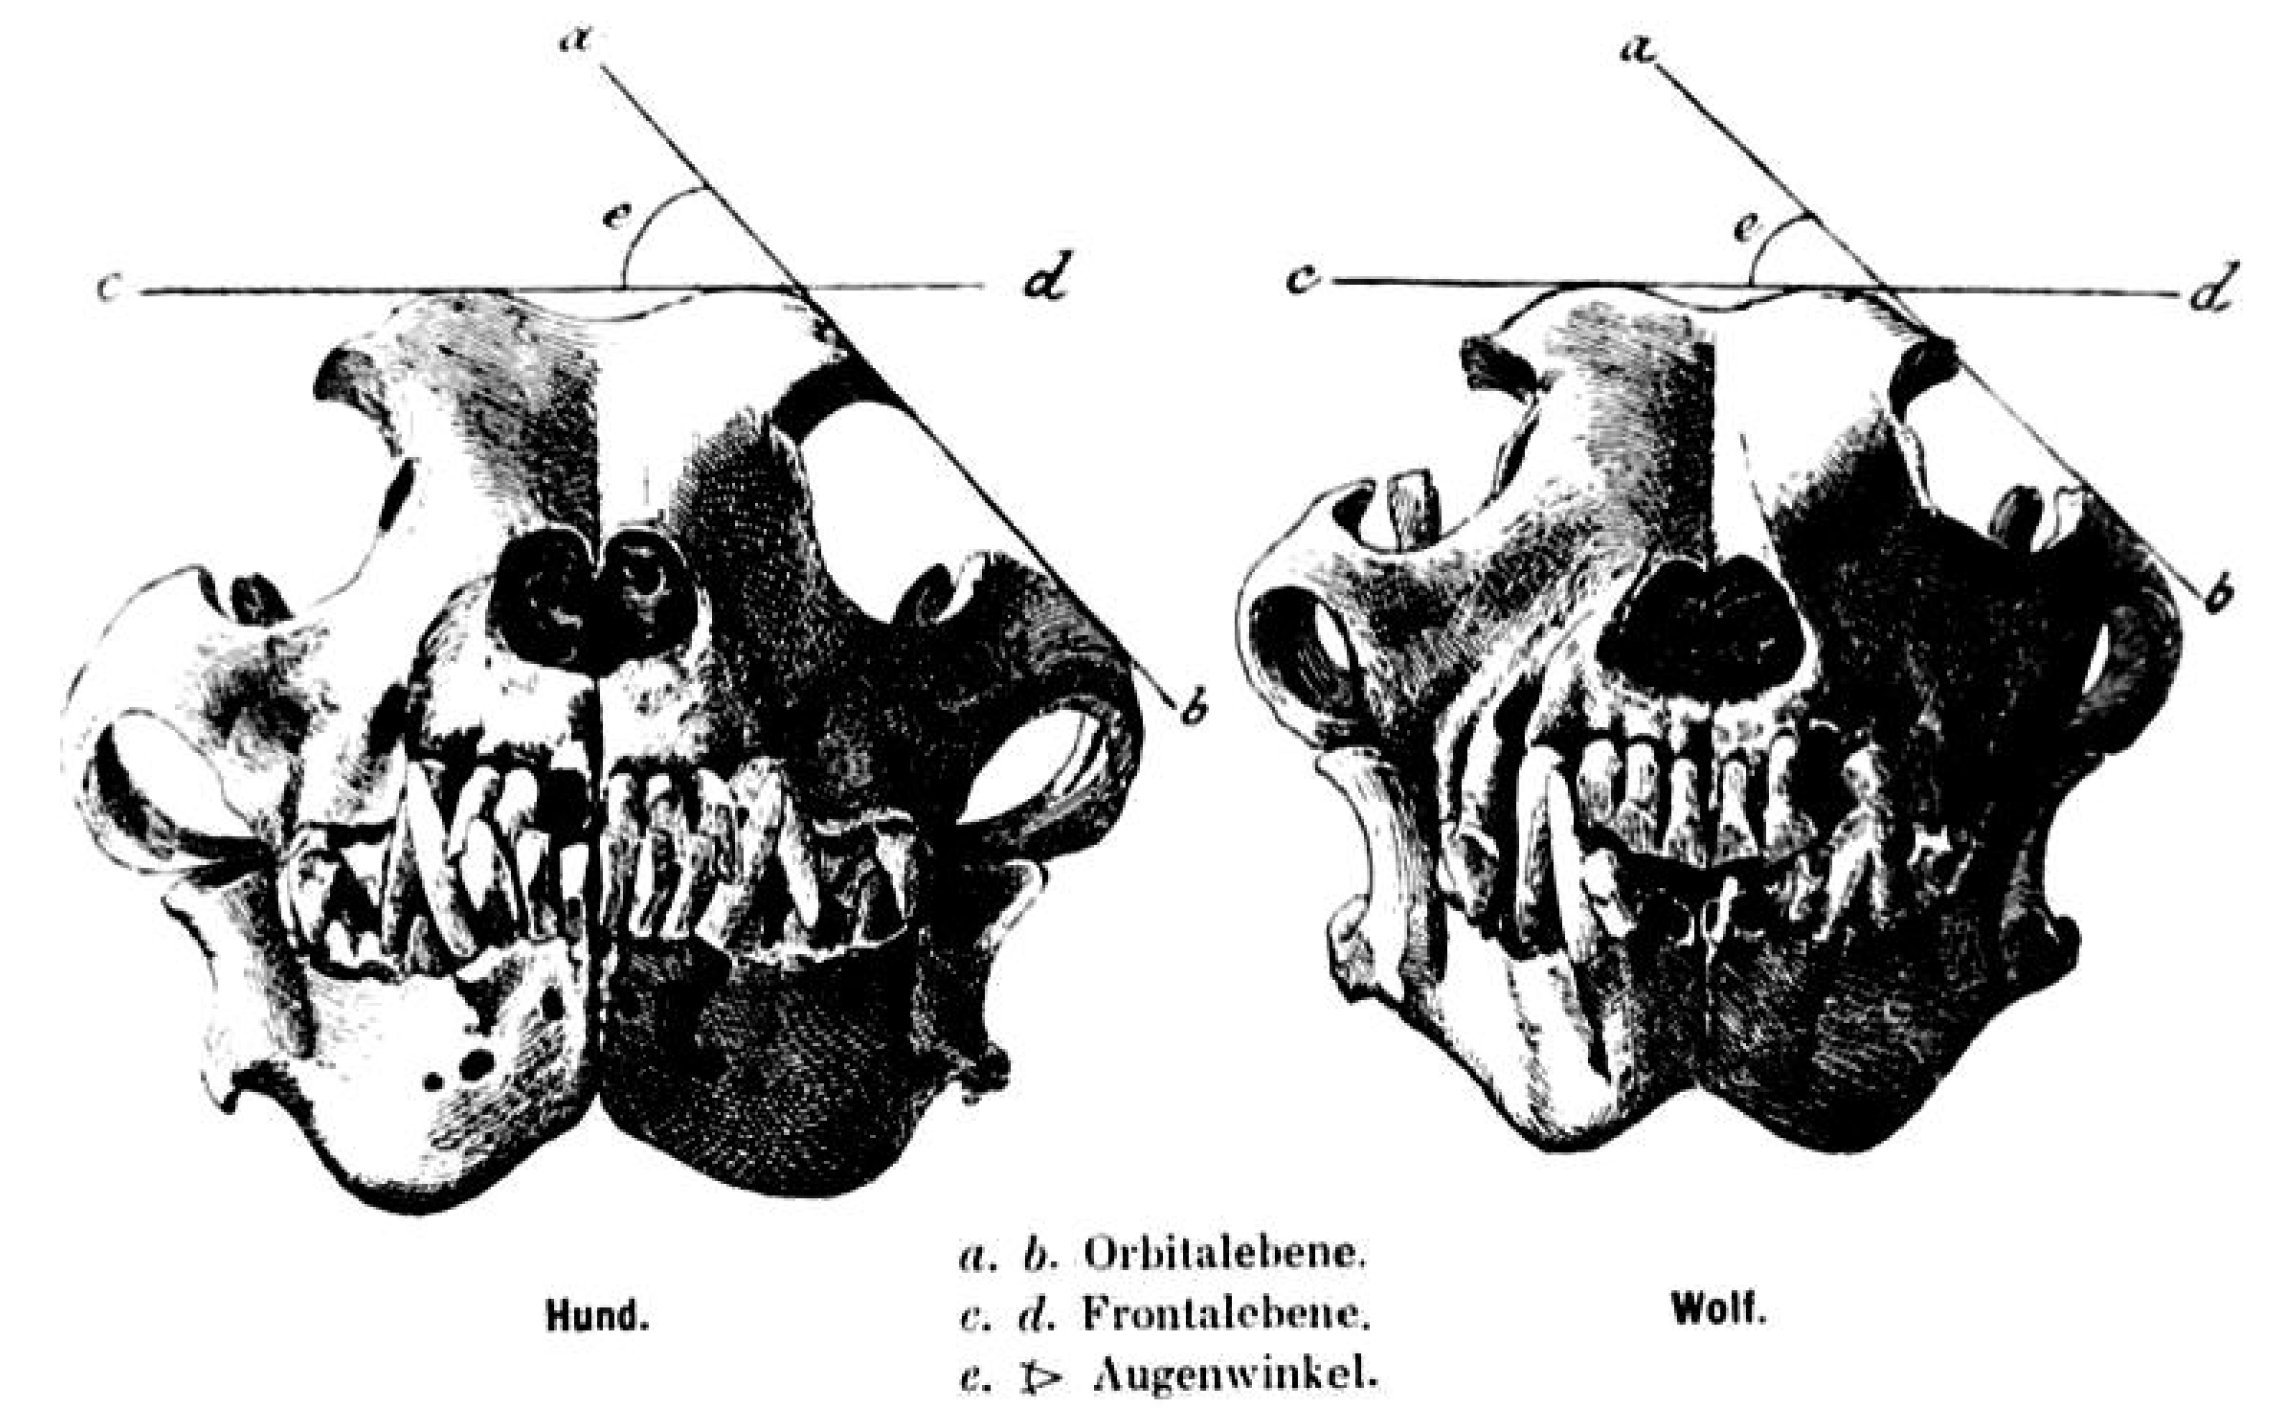 occipital tuberosity in a dog